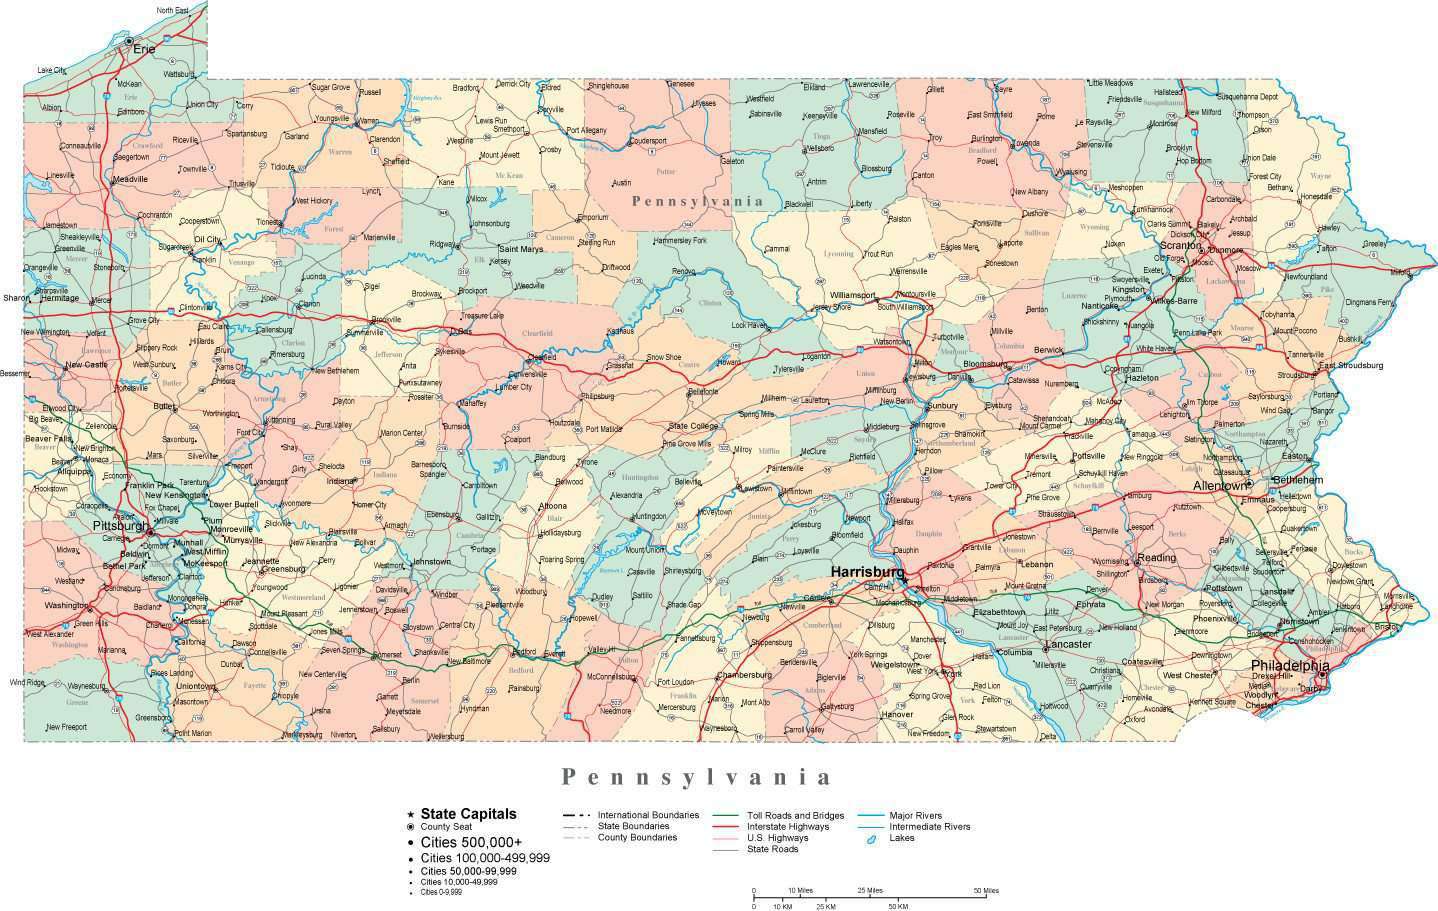 pennsylvania-digital-vector-map-with-counties-major-cities-roads